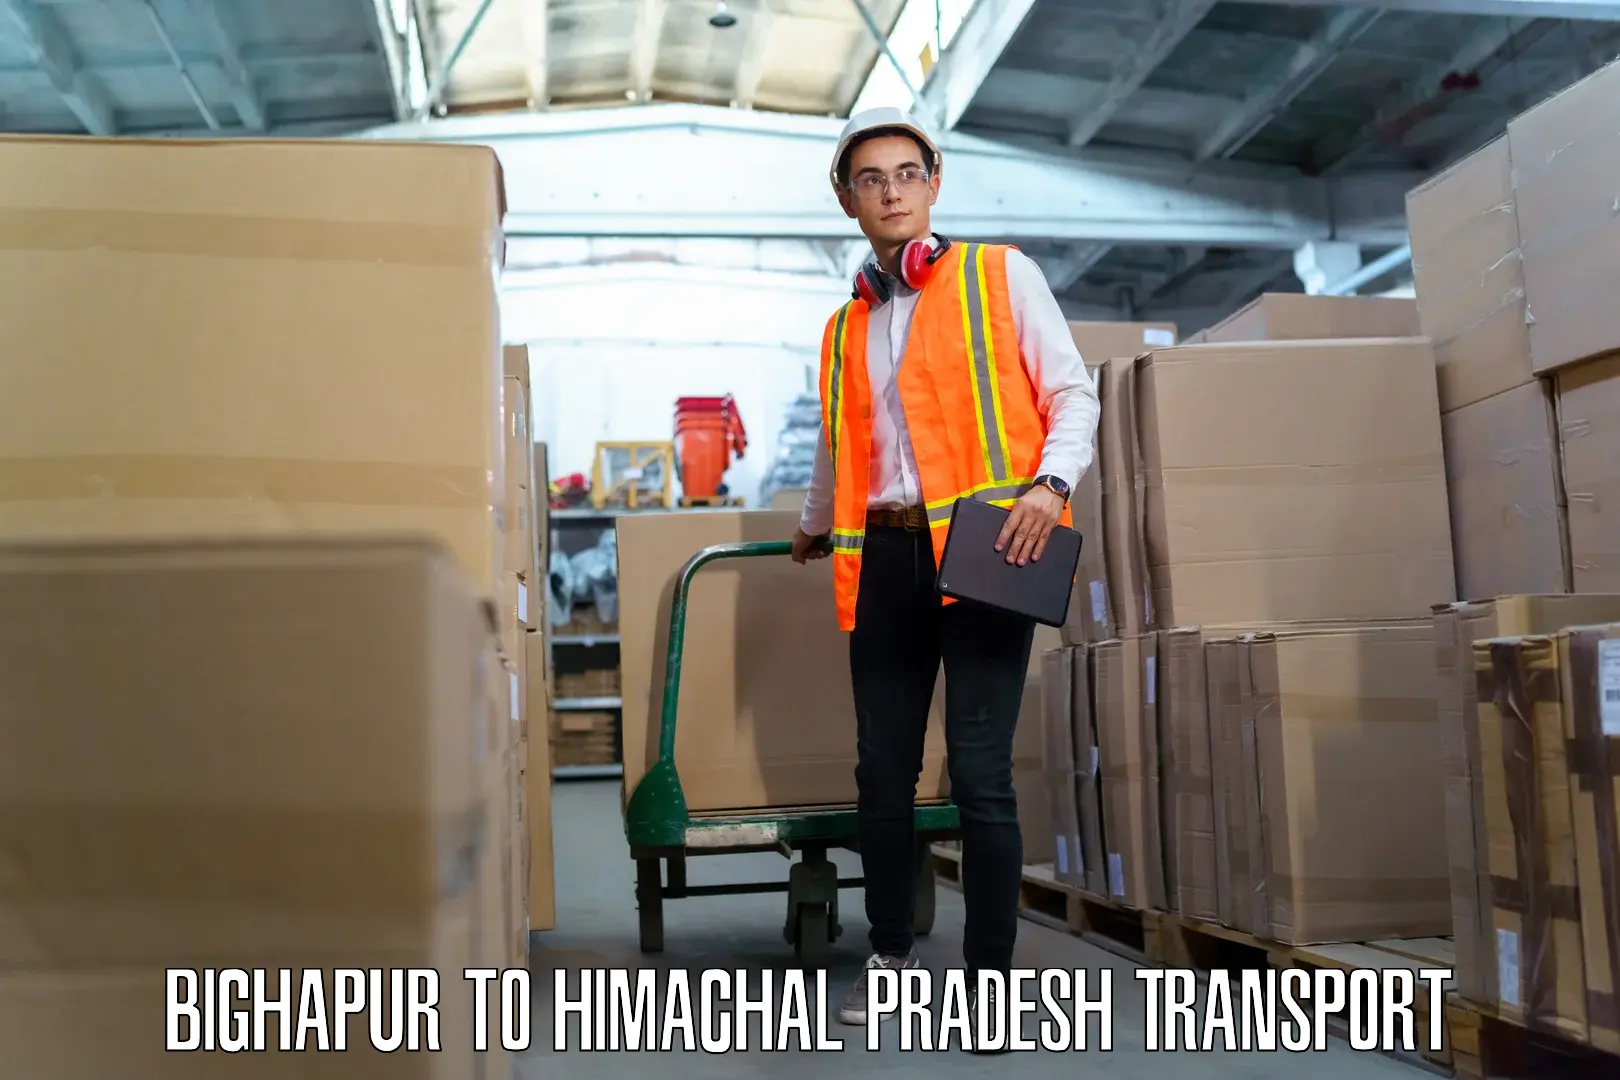 Furniture transport service Bighapur to Himachal Pradesh